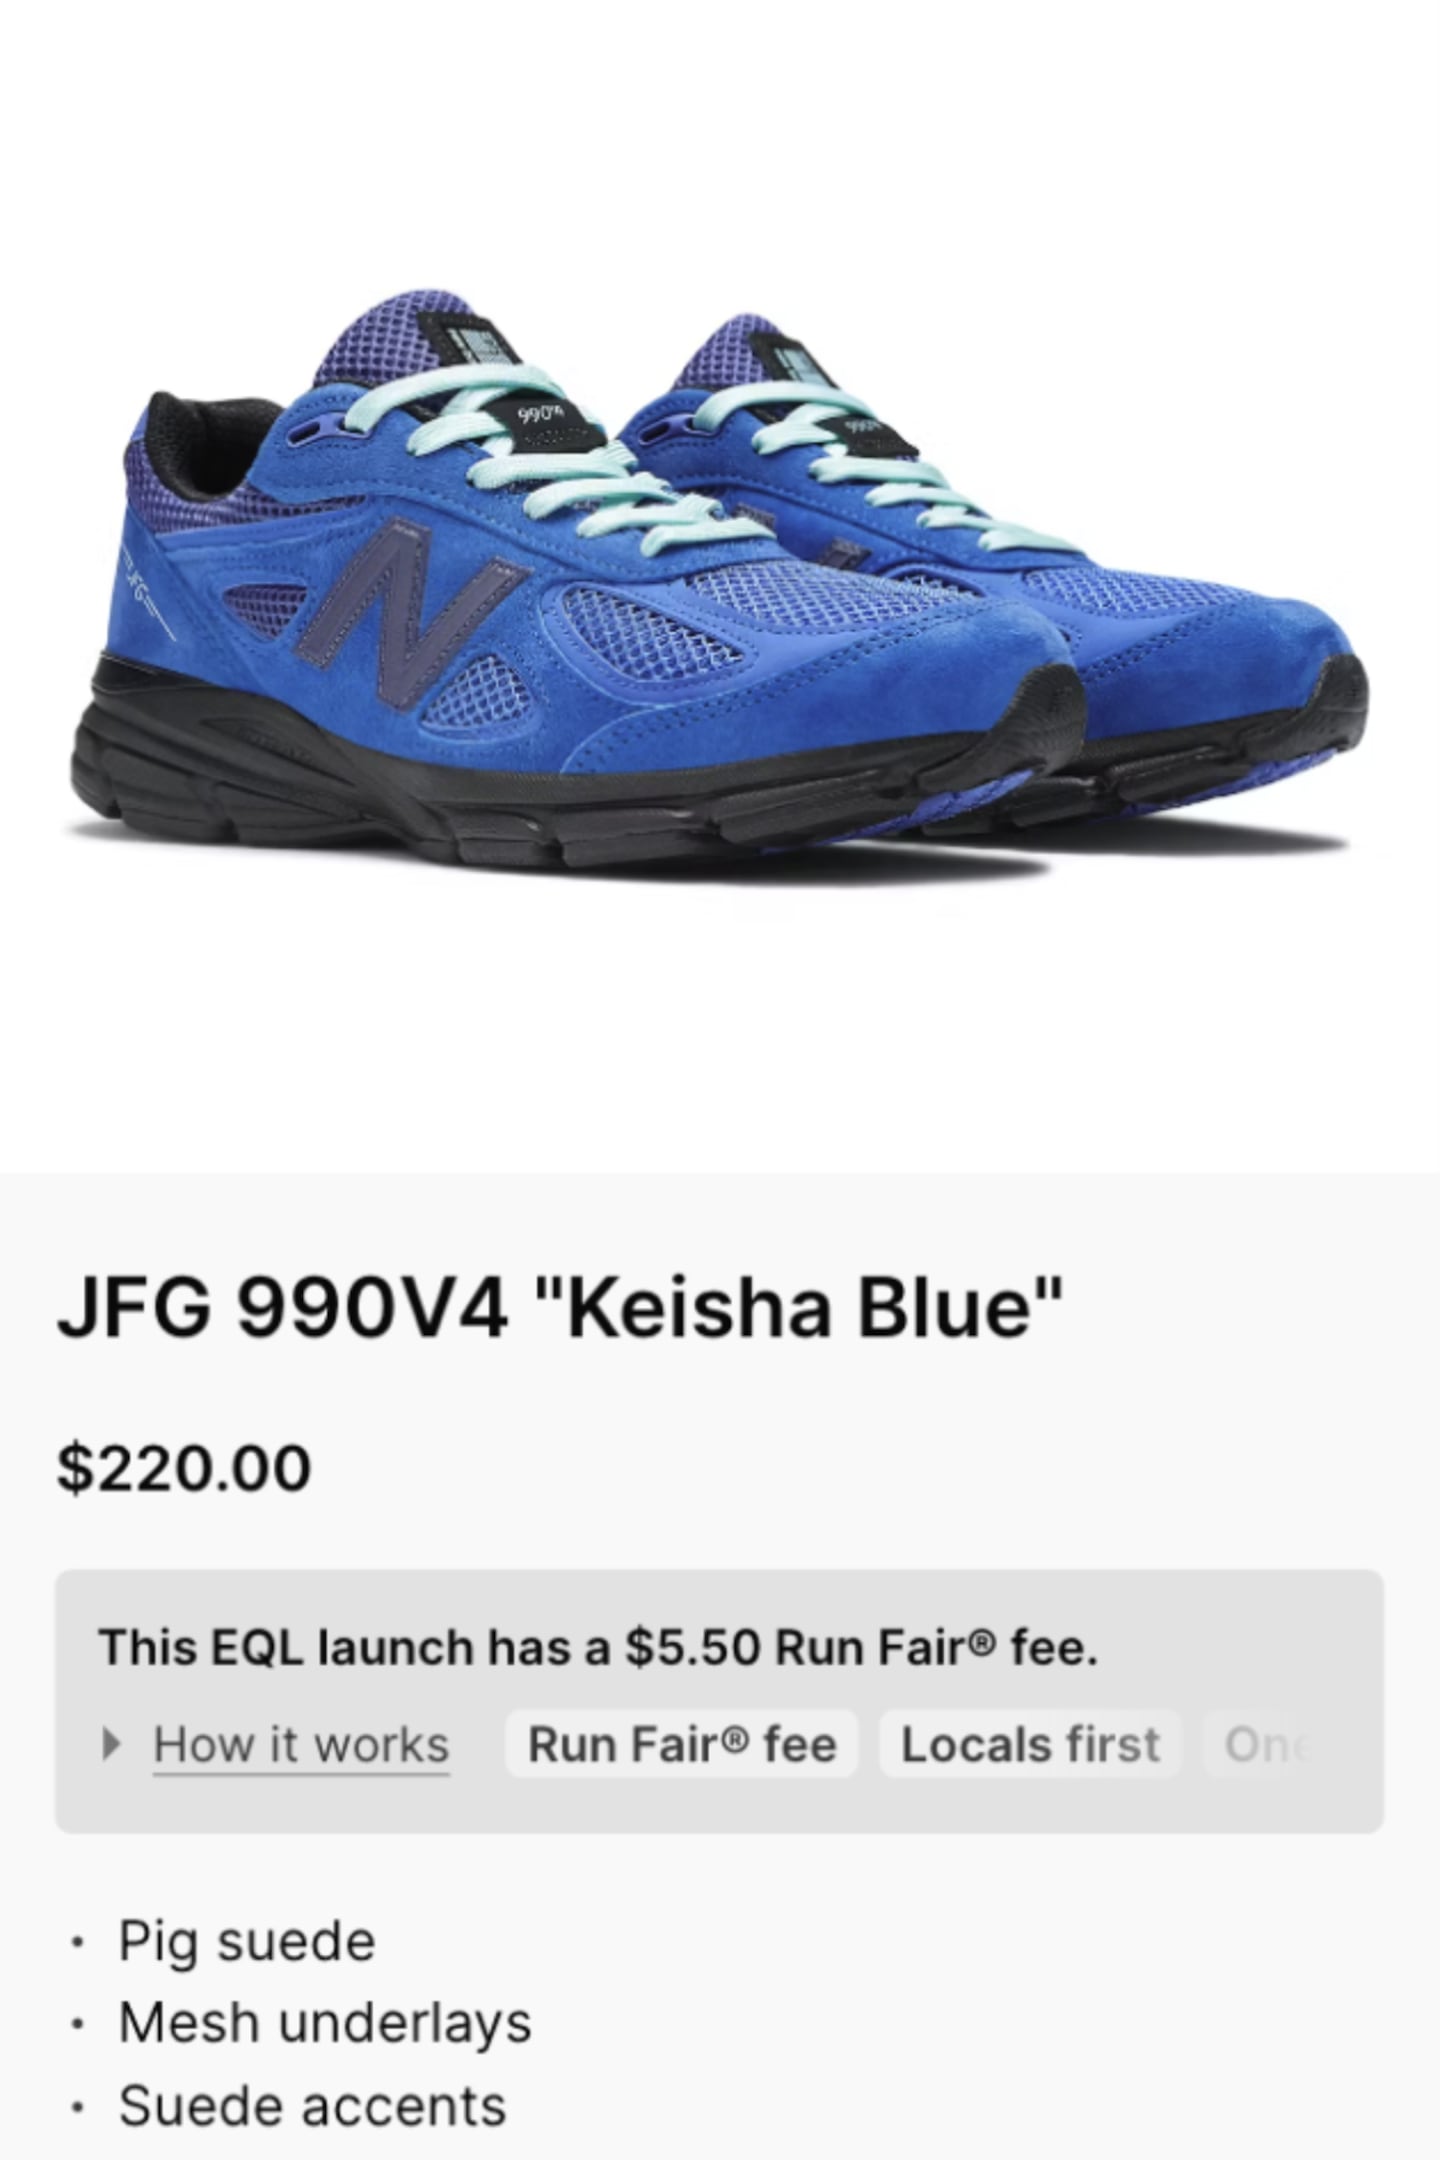 The EQL launch page for the Joe Freshgoods x New Balance "Keisha Blue"